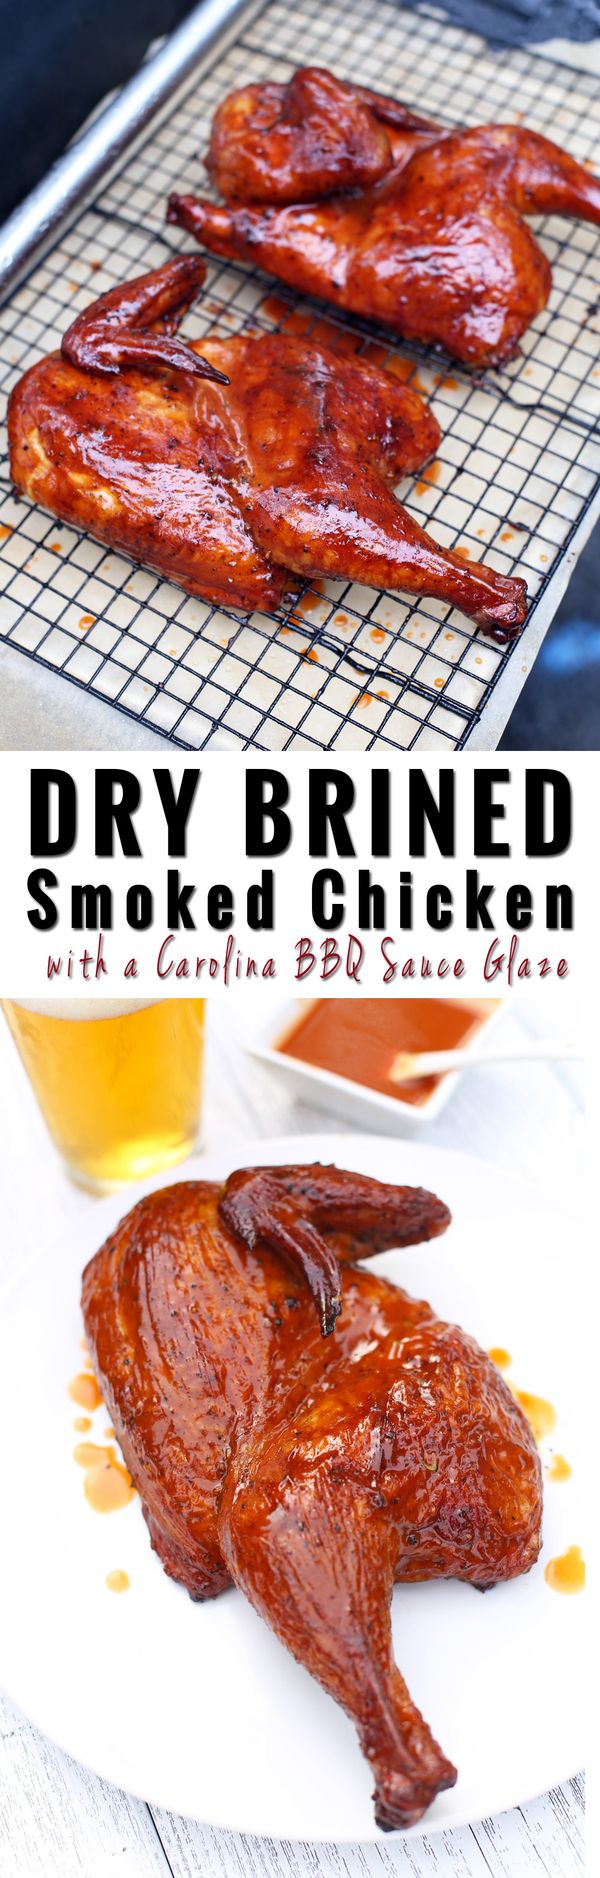 Dry Brine Smoked Chicken with a Carolina Glaze